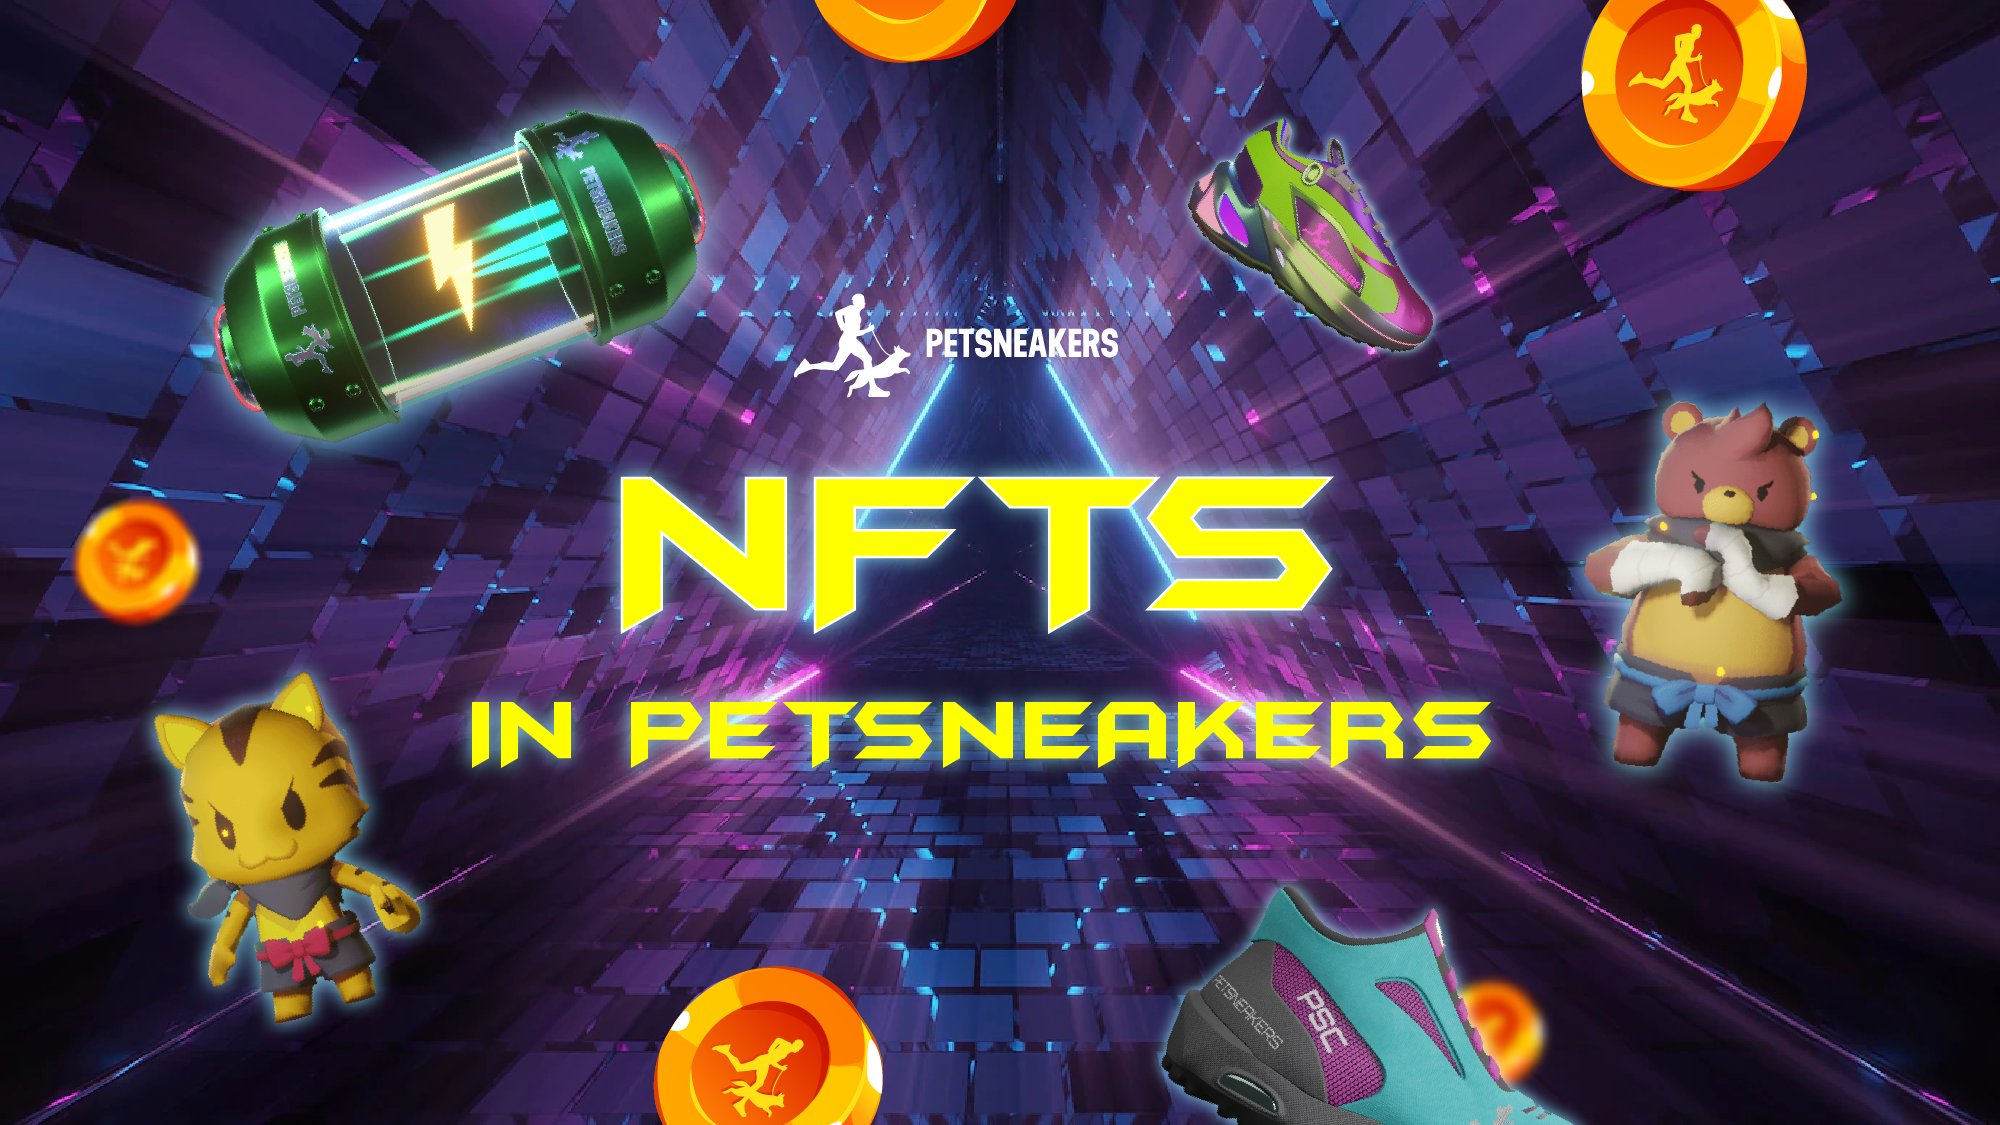 Petsneakers NFT 1